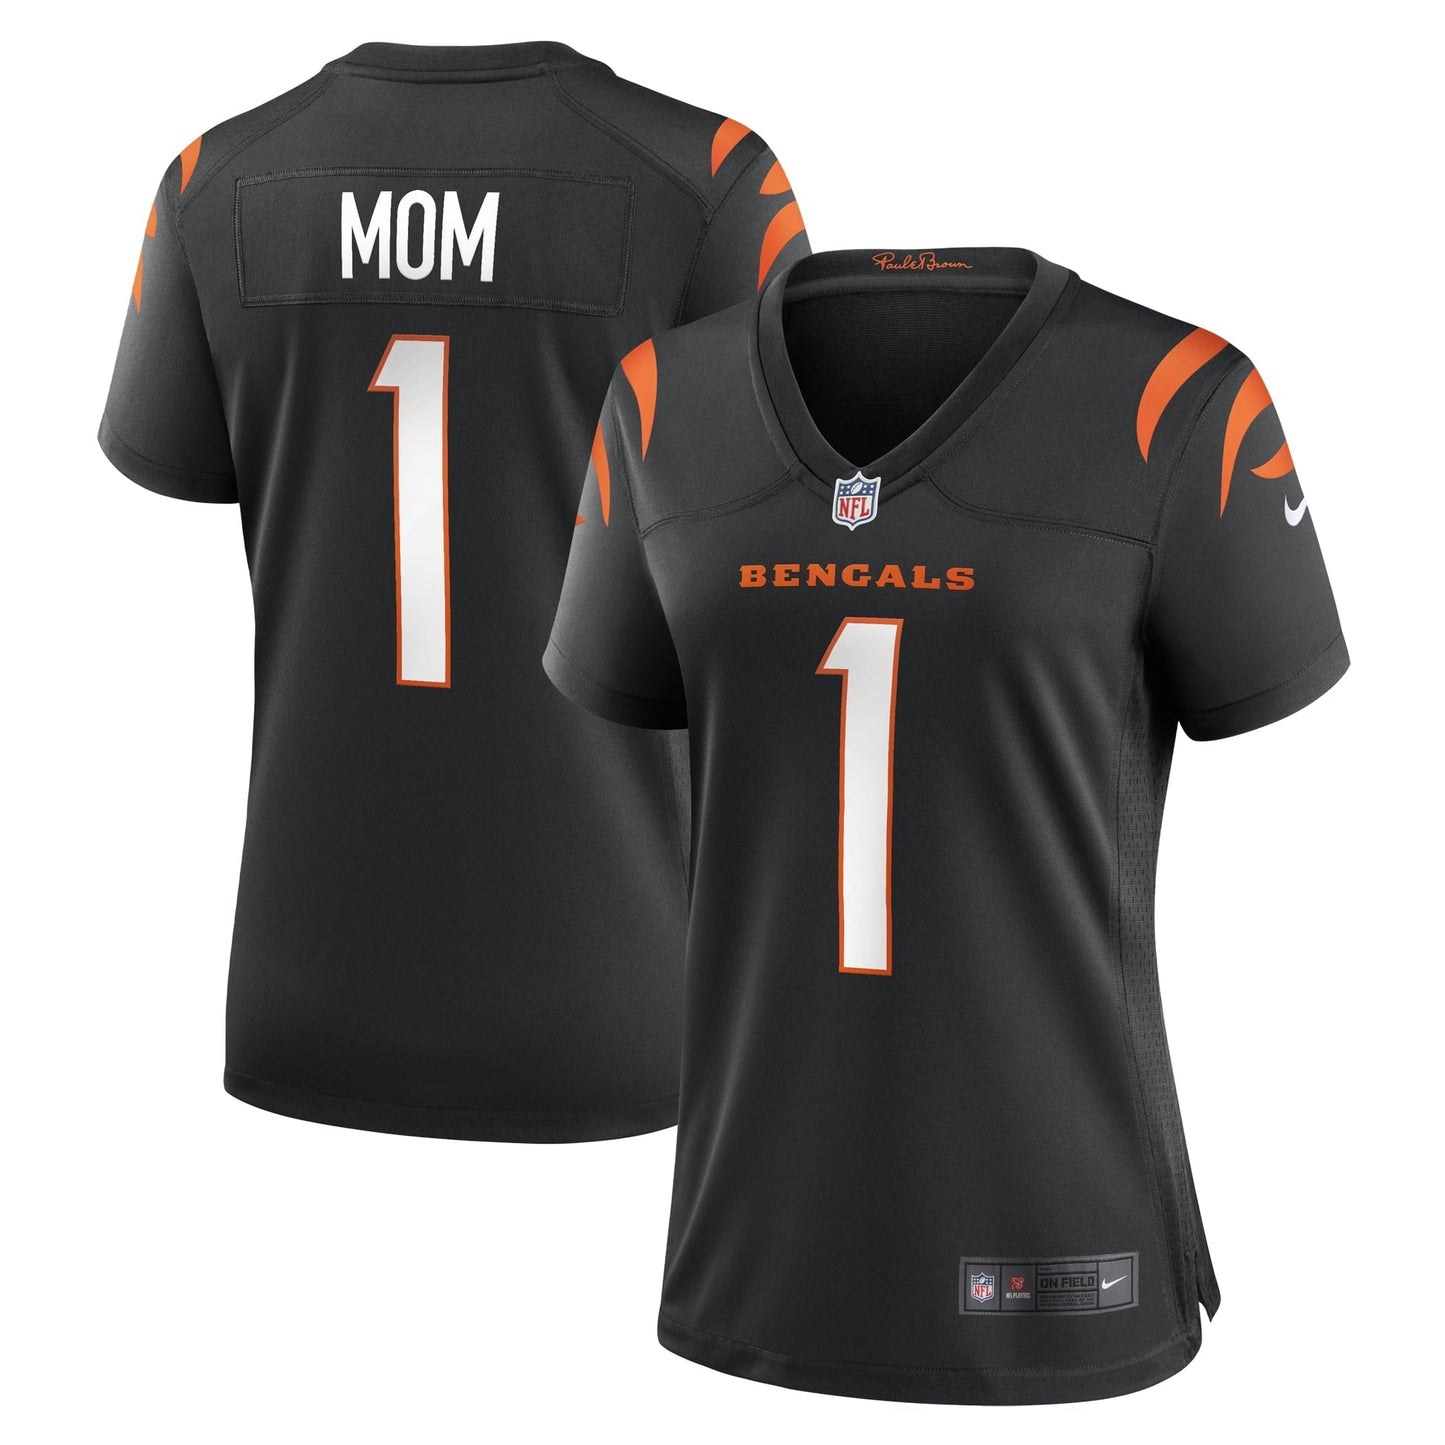 Women's Nike Number 1 Mom Black Cincinnati Bengals Game Jersey